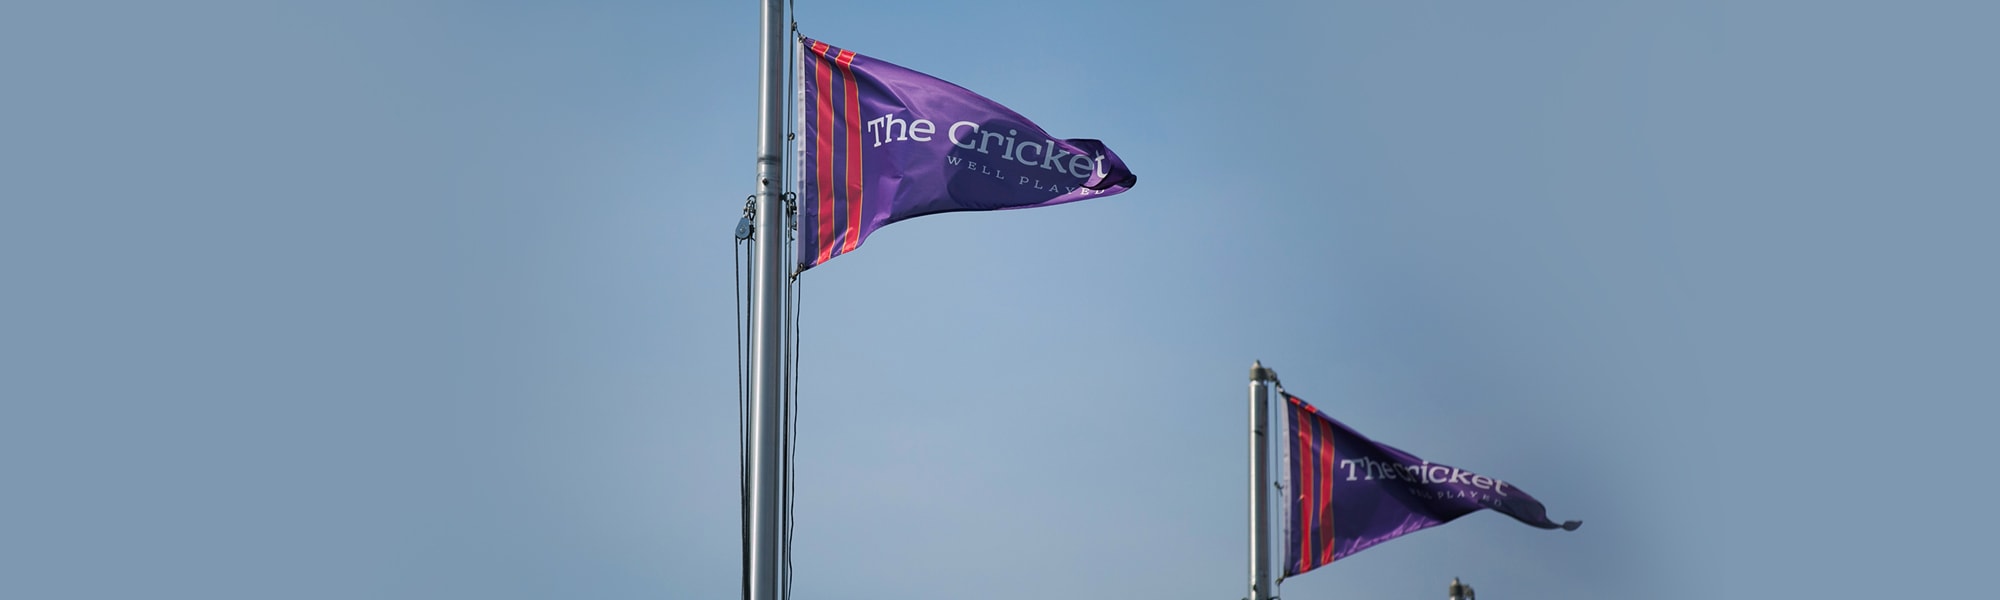 Toronto Cricket Club flags